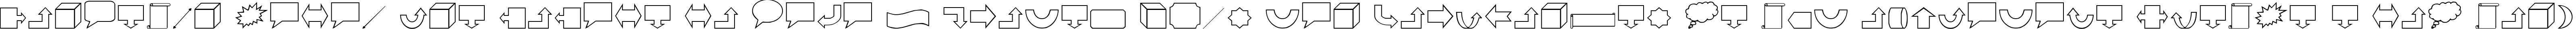 Пример написания шрифтом VariShapes текста на испанском